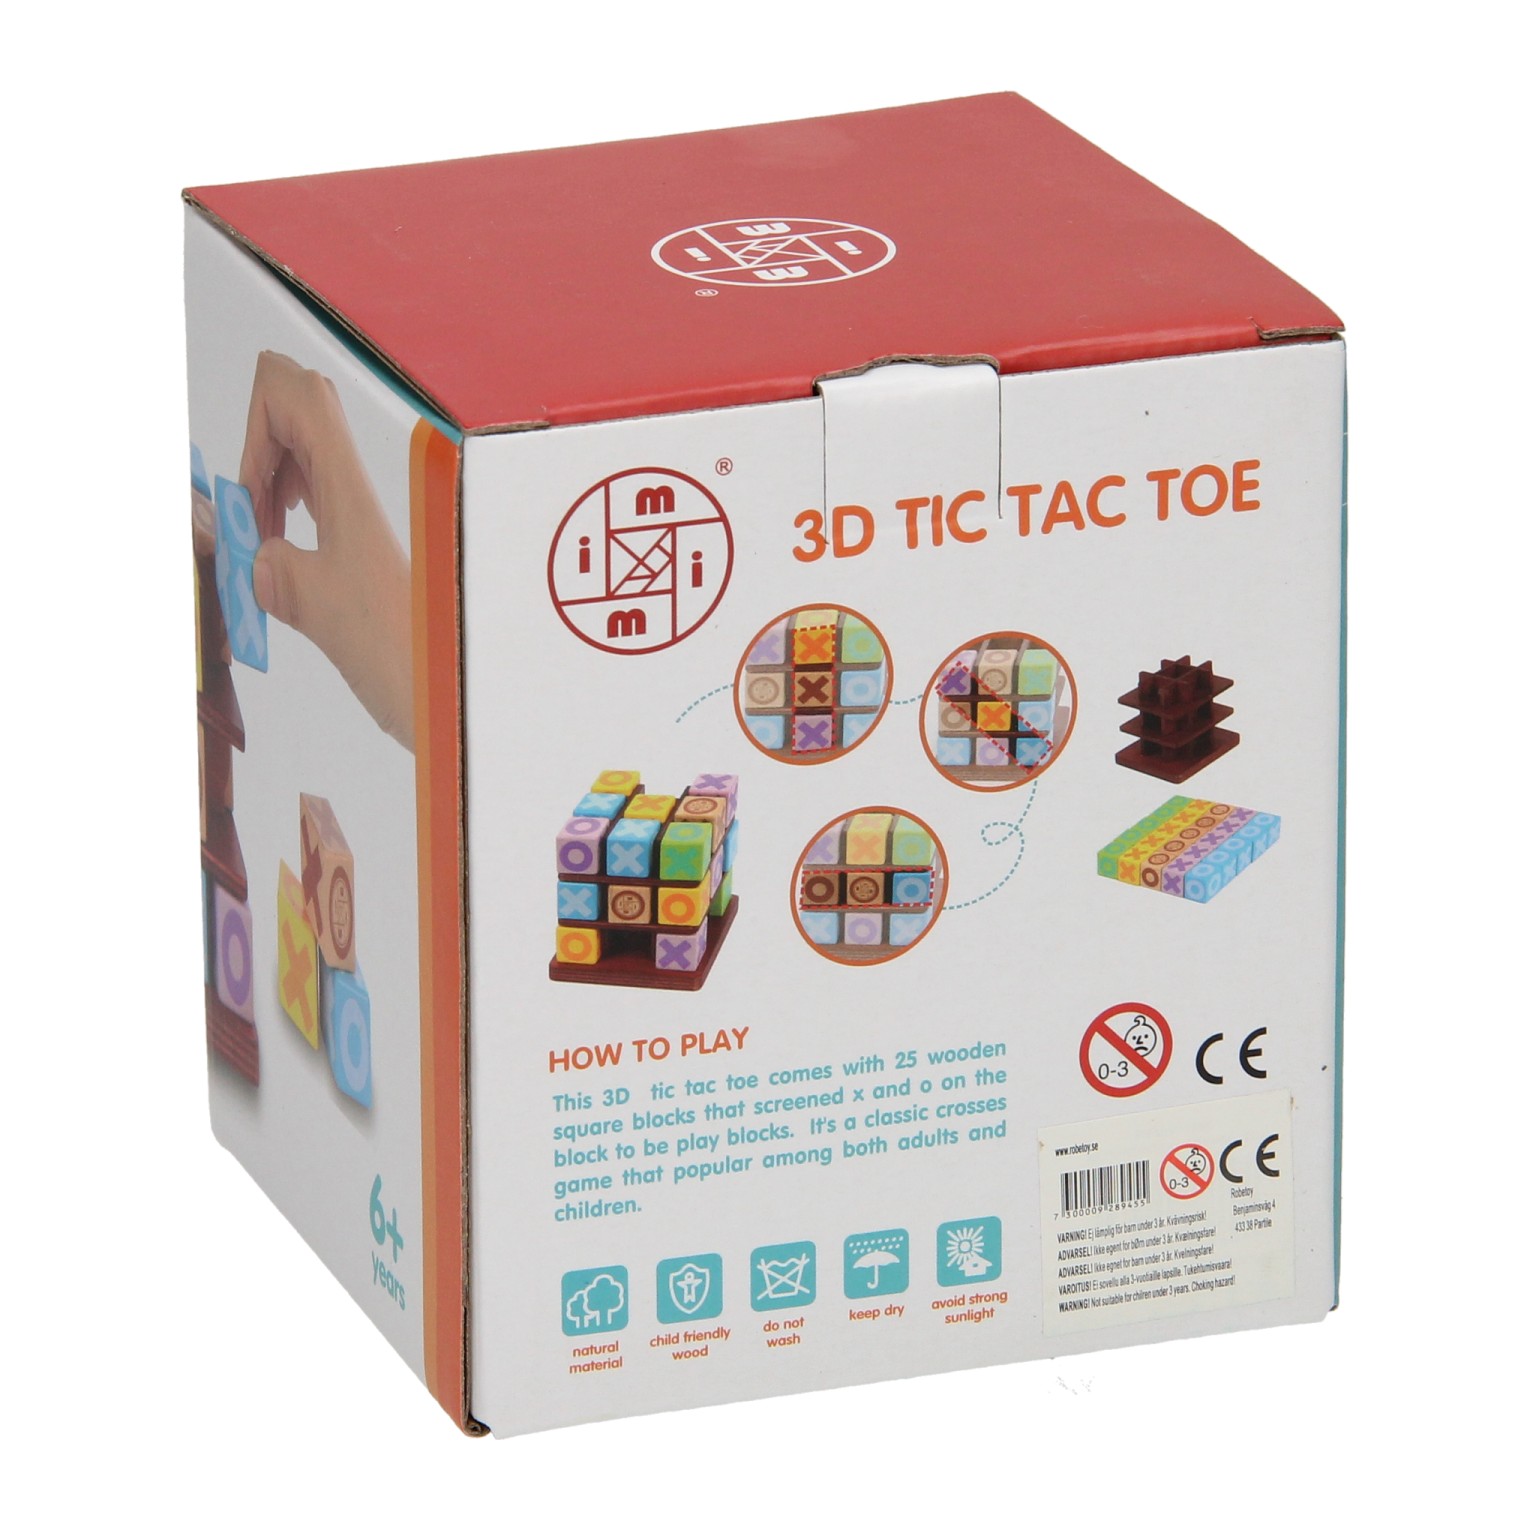 Jeu de Tic Tac Toe 3D en bois, 26 pièces.